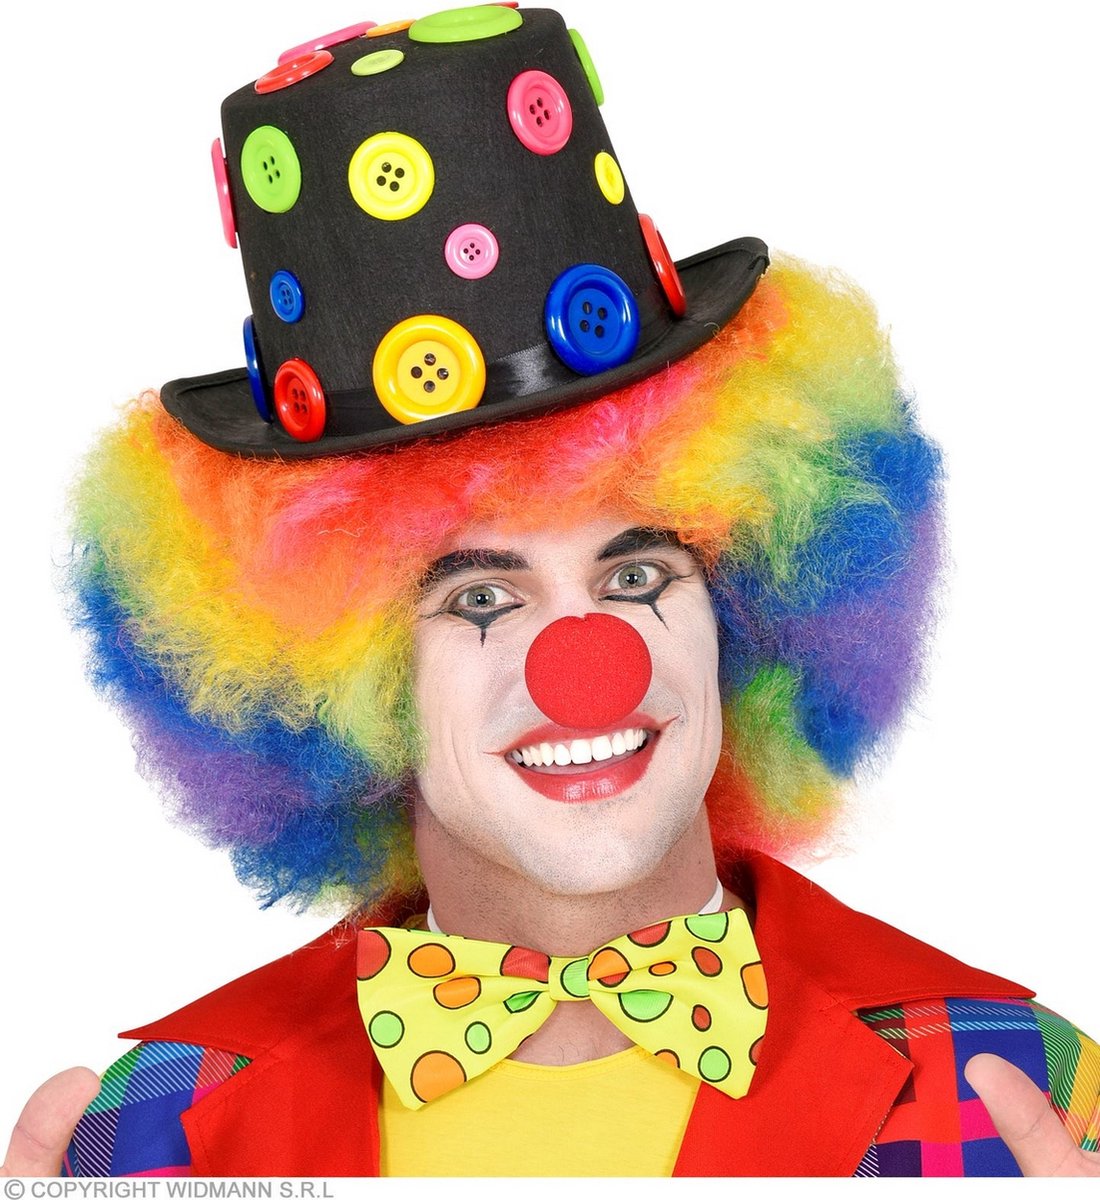 Widmann - Clown & Nar Kostuum - Knoop Op Je Hoofd Hoed - Zwart, Multicolor - Carnavalskleding - Verkleedkleding